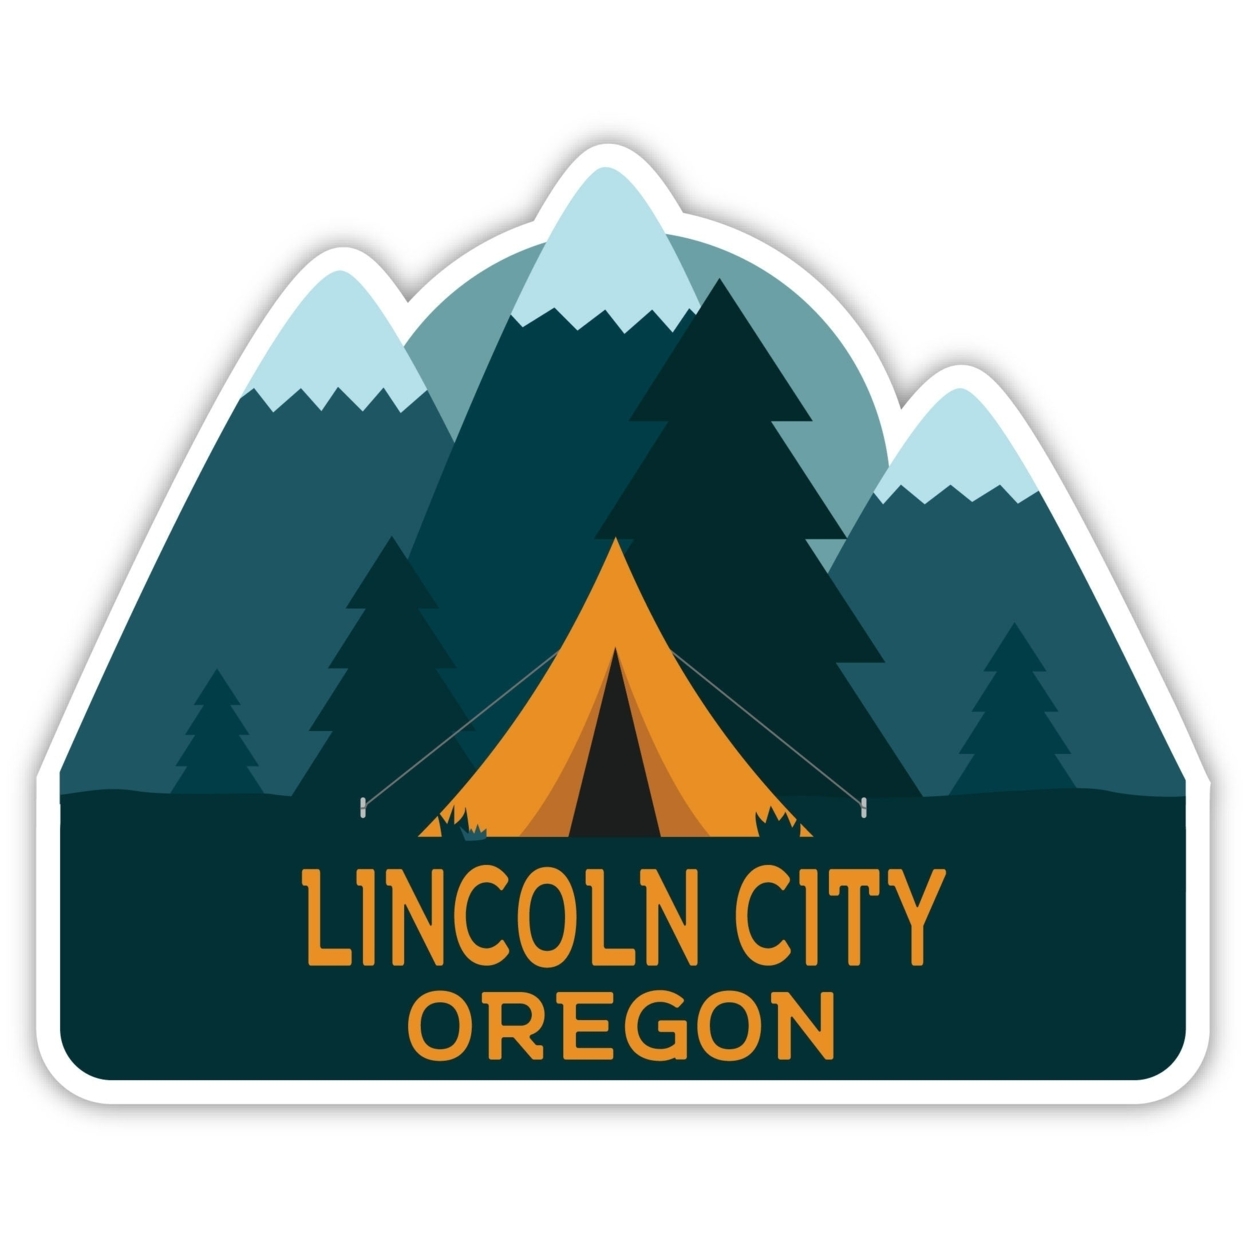 Lincoln City Oregon Souvenir Decorative Stickers (Choose Theme And Size) - 2-Inch, Camp Life